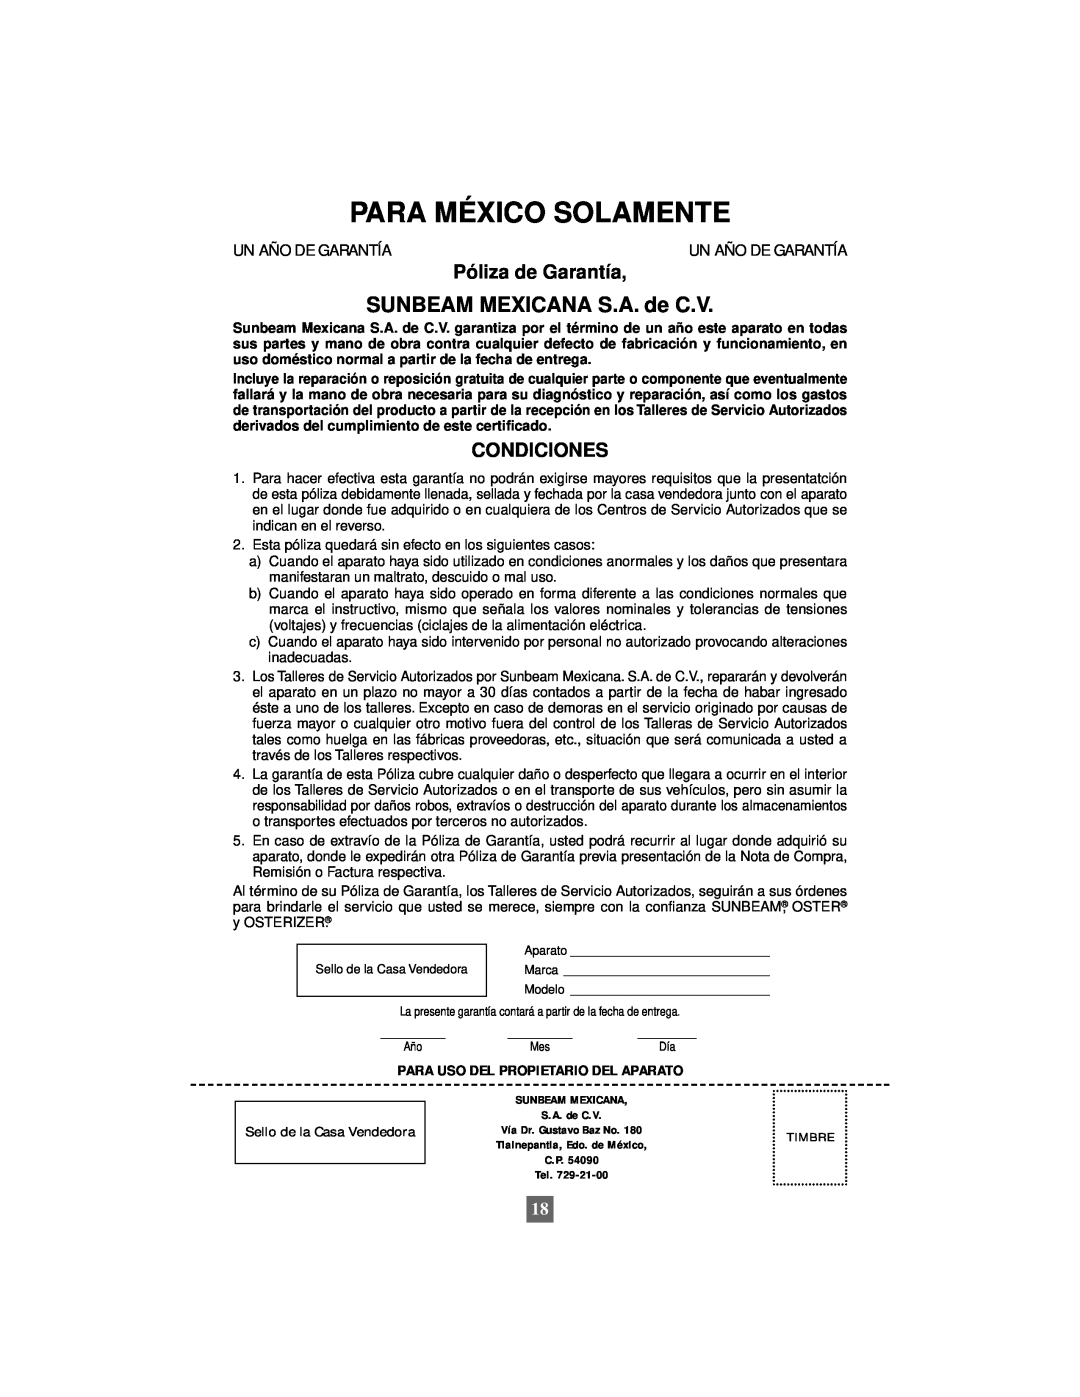 Oster 6210 manual SUNBEAM MEXICANA S.A. de C.V, Para México Solamente, Para Uso Del Propietario Del Aparato 